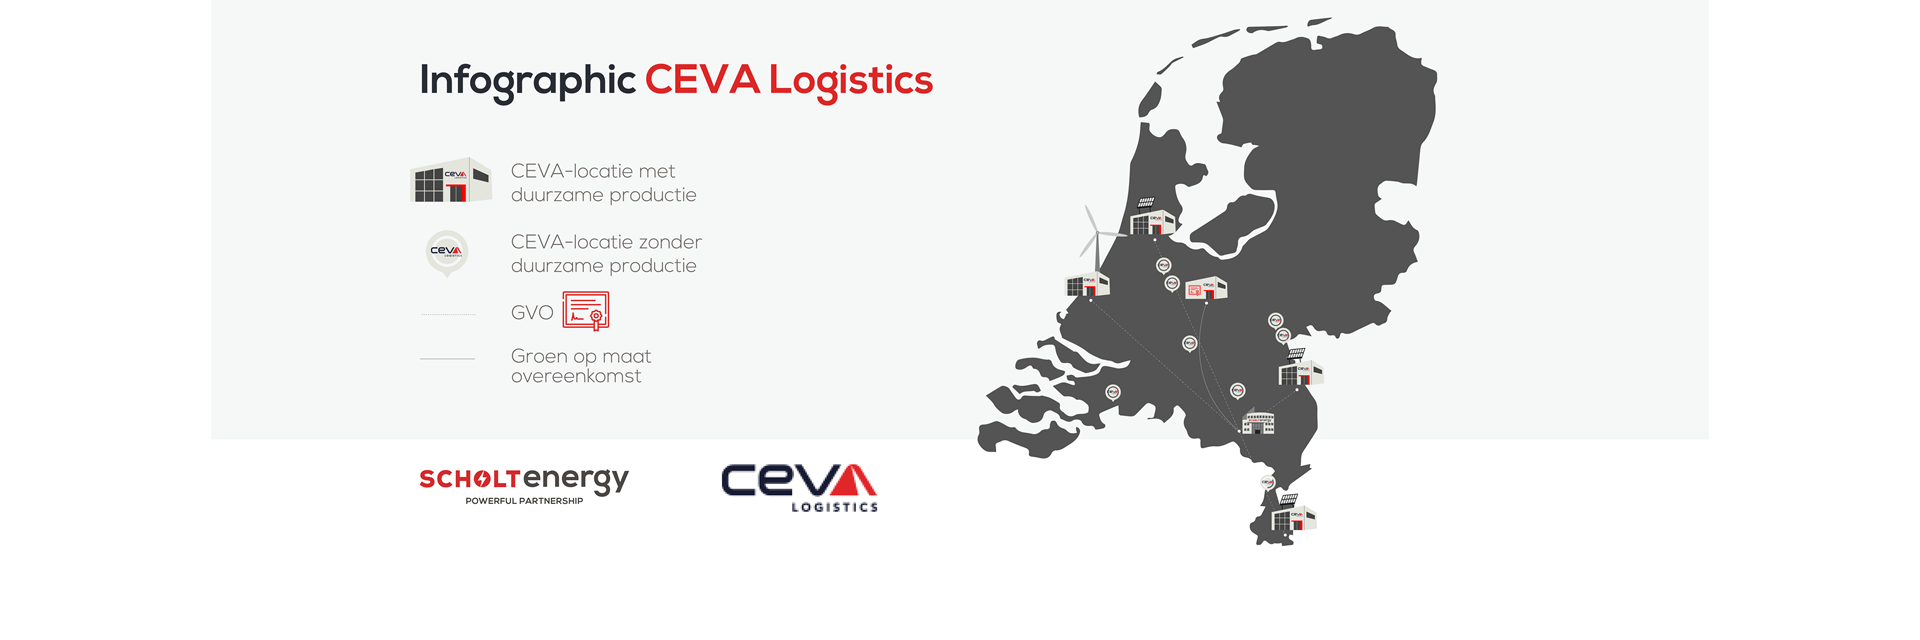 CEVA Logistics Infographic 02 02 (3)